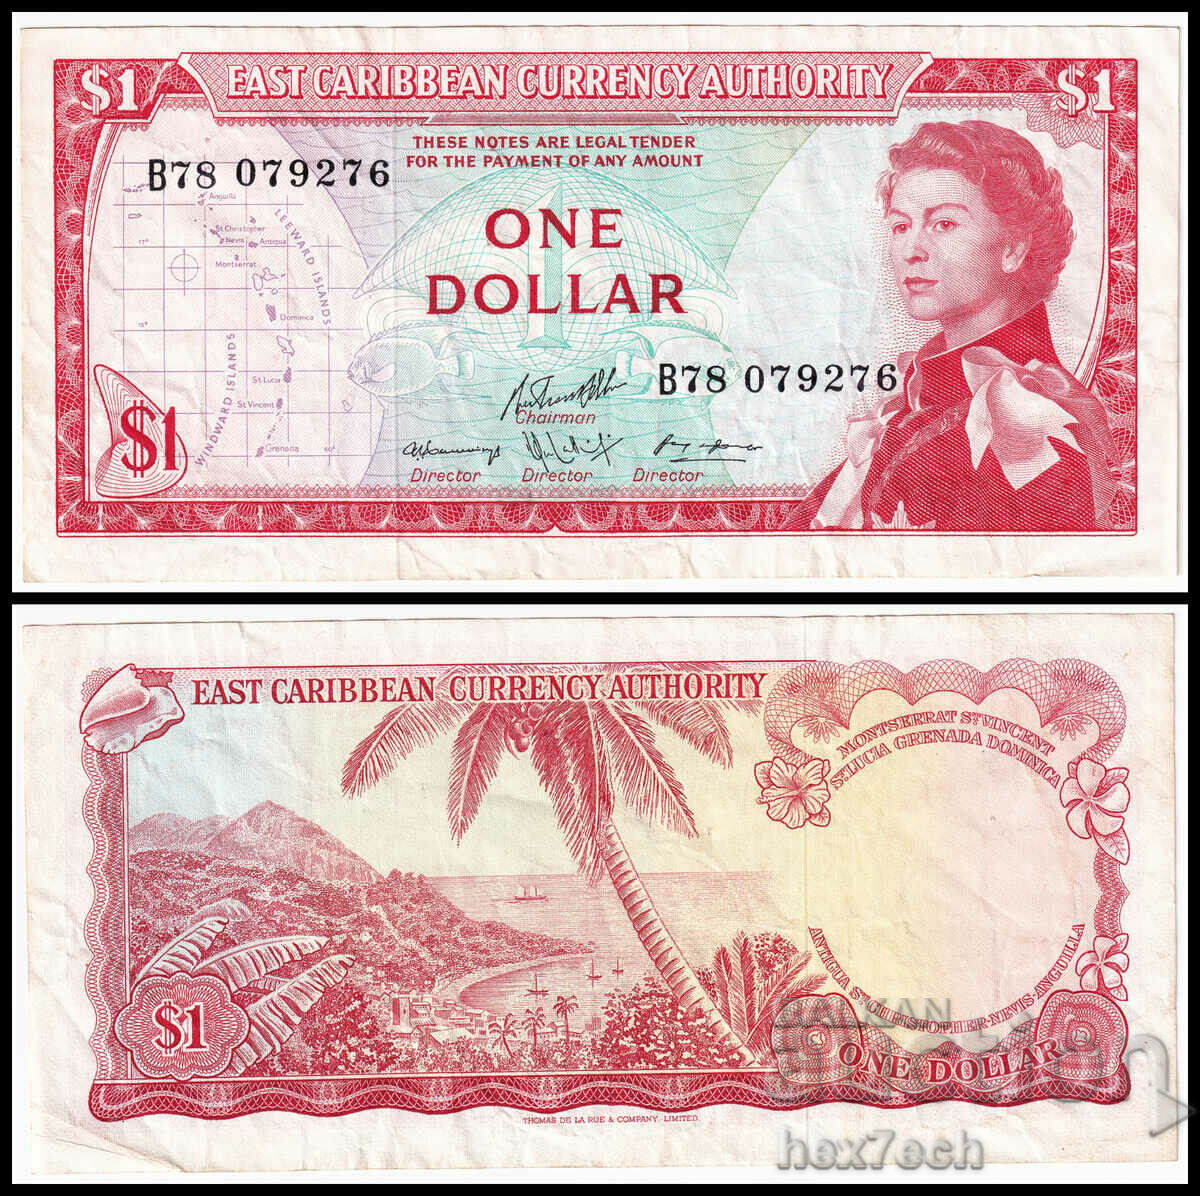 ❤️ ⭐ Източни Кариби 1965 1 долар ⭐ ❤️